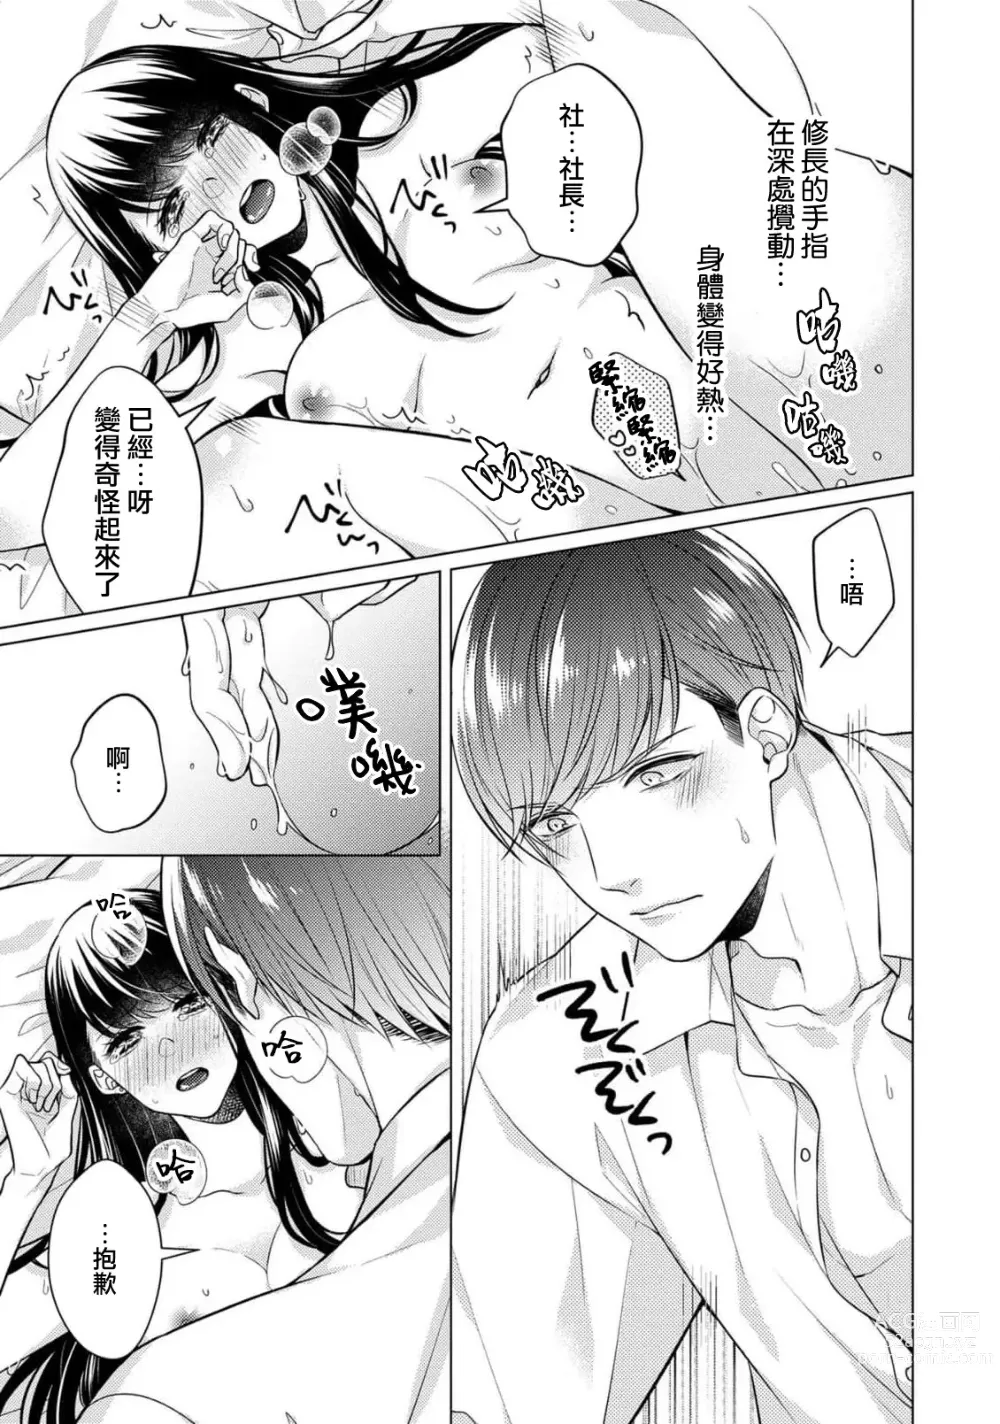 Page 28 of manga 宠爱王子和处女少女~30岁还是处女，这一次和真壁社长签订了炮友契约~ 1-5 end